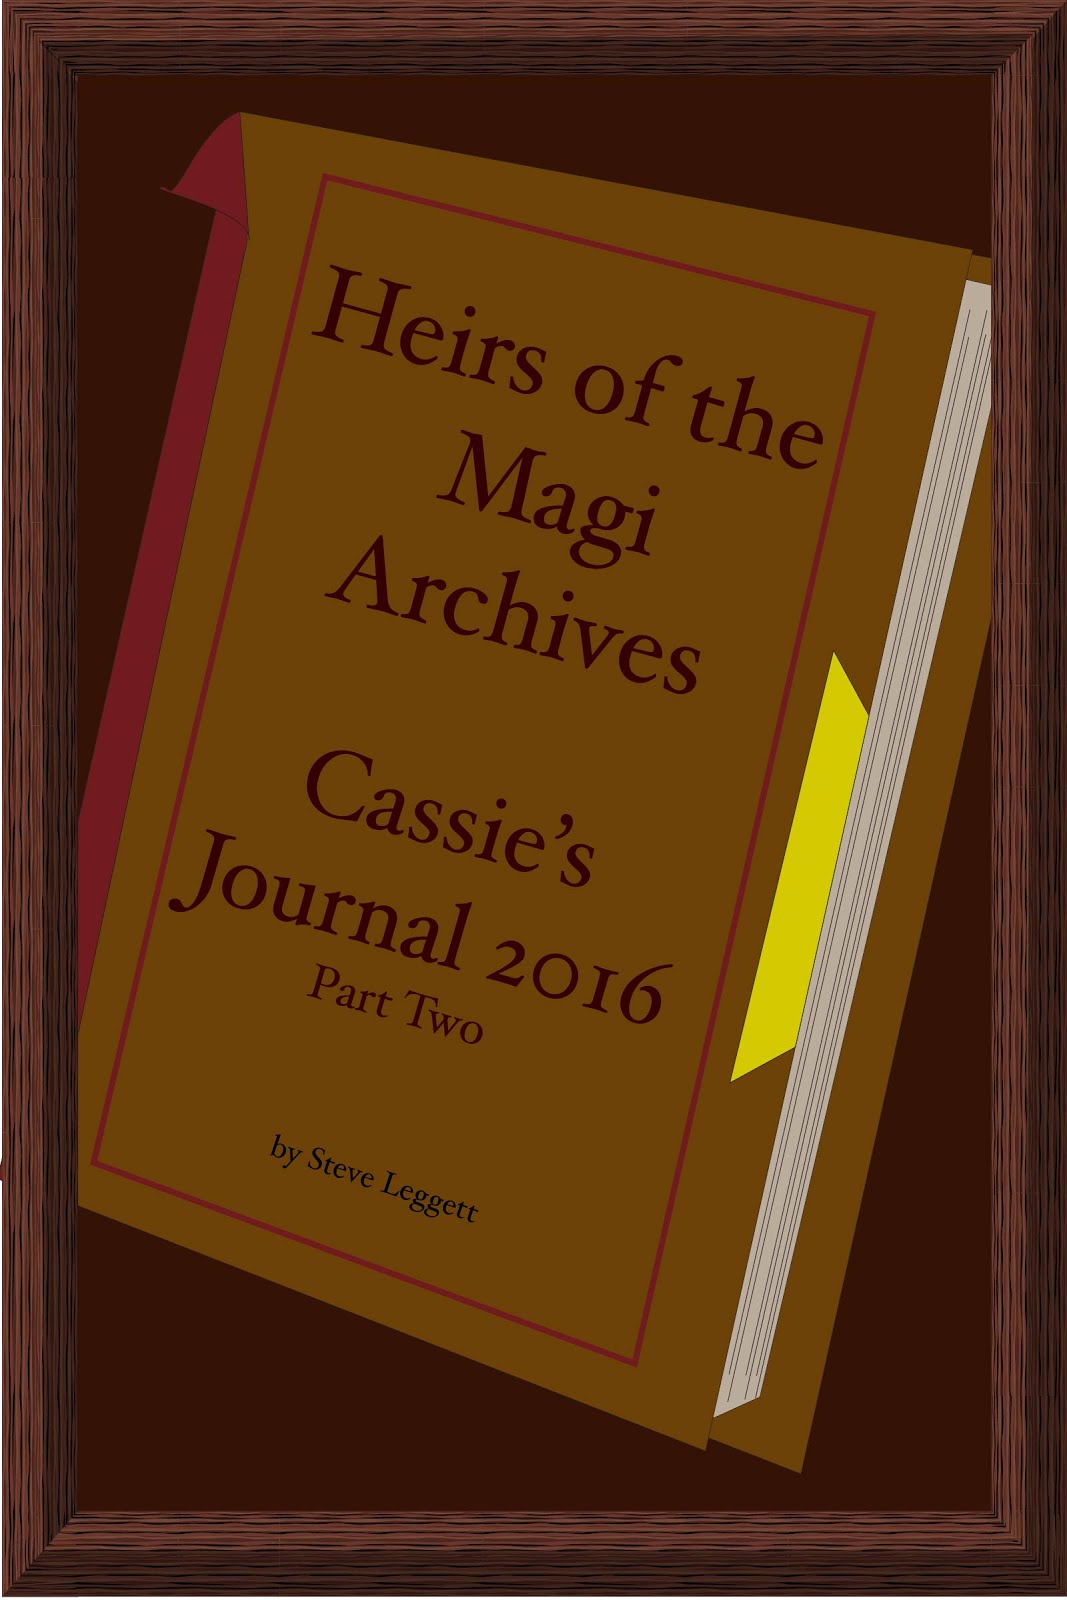 Cassie's Journal 2016 Part Two